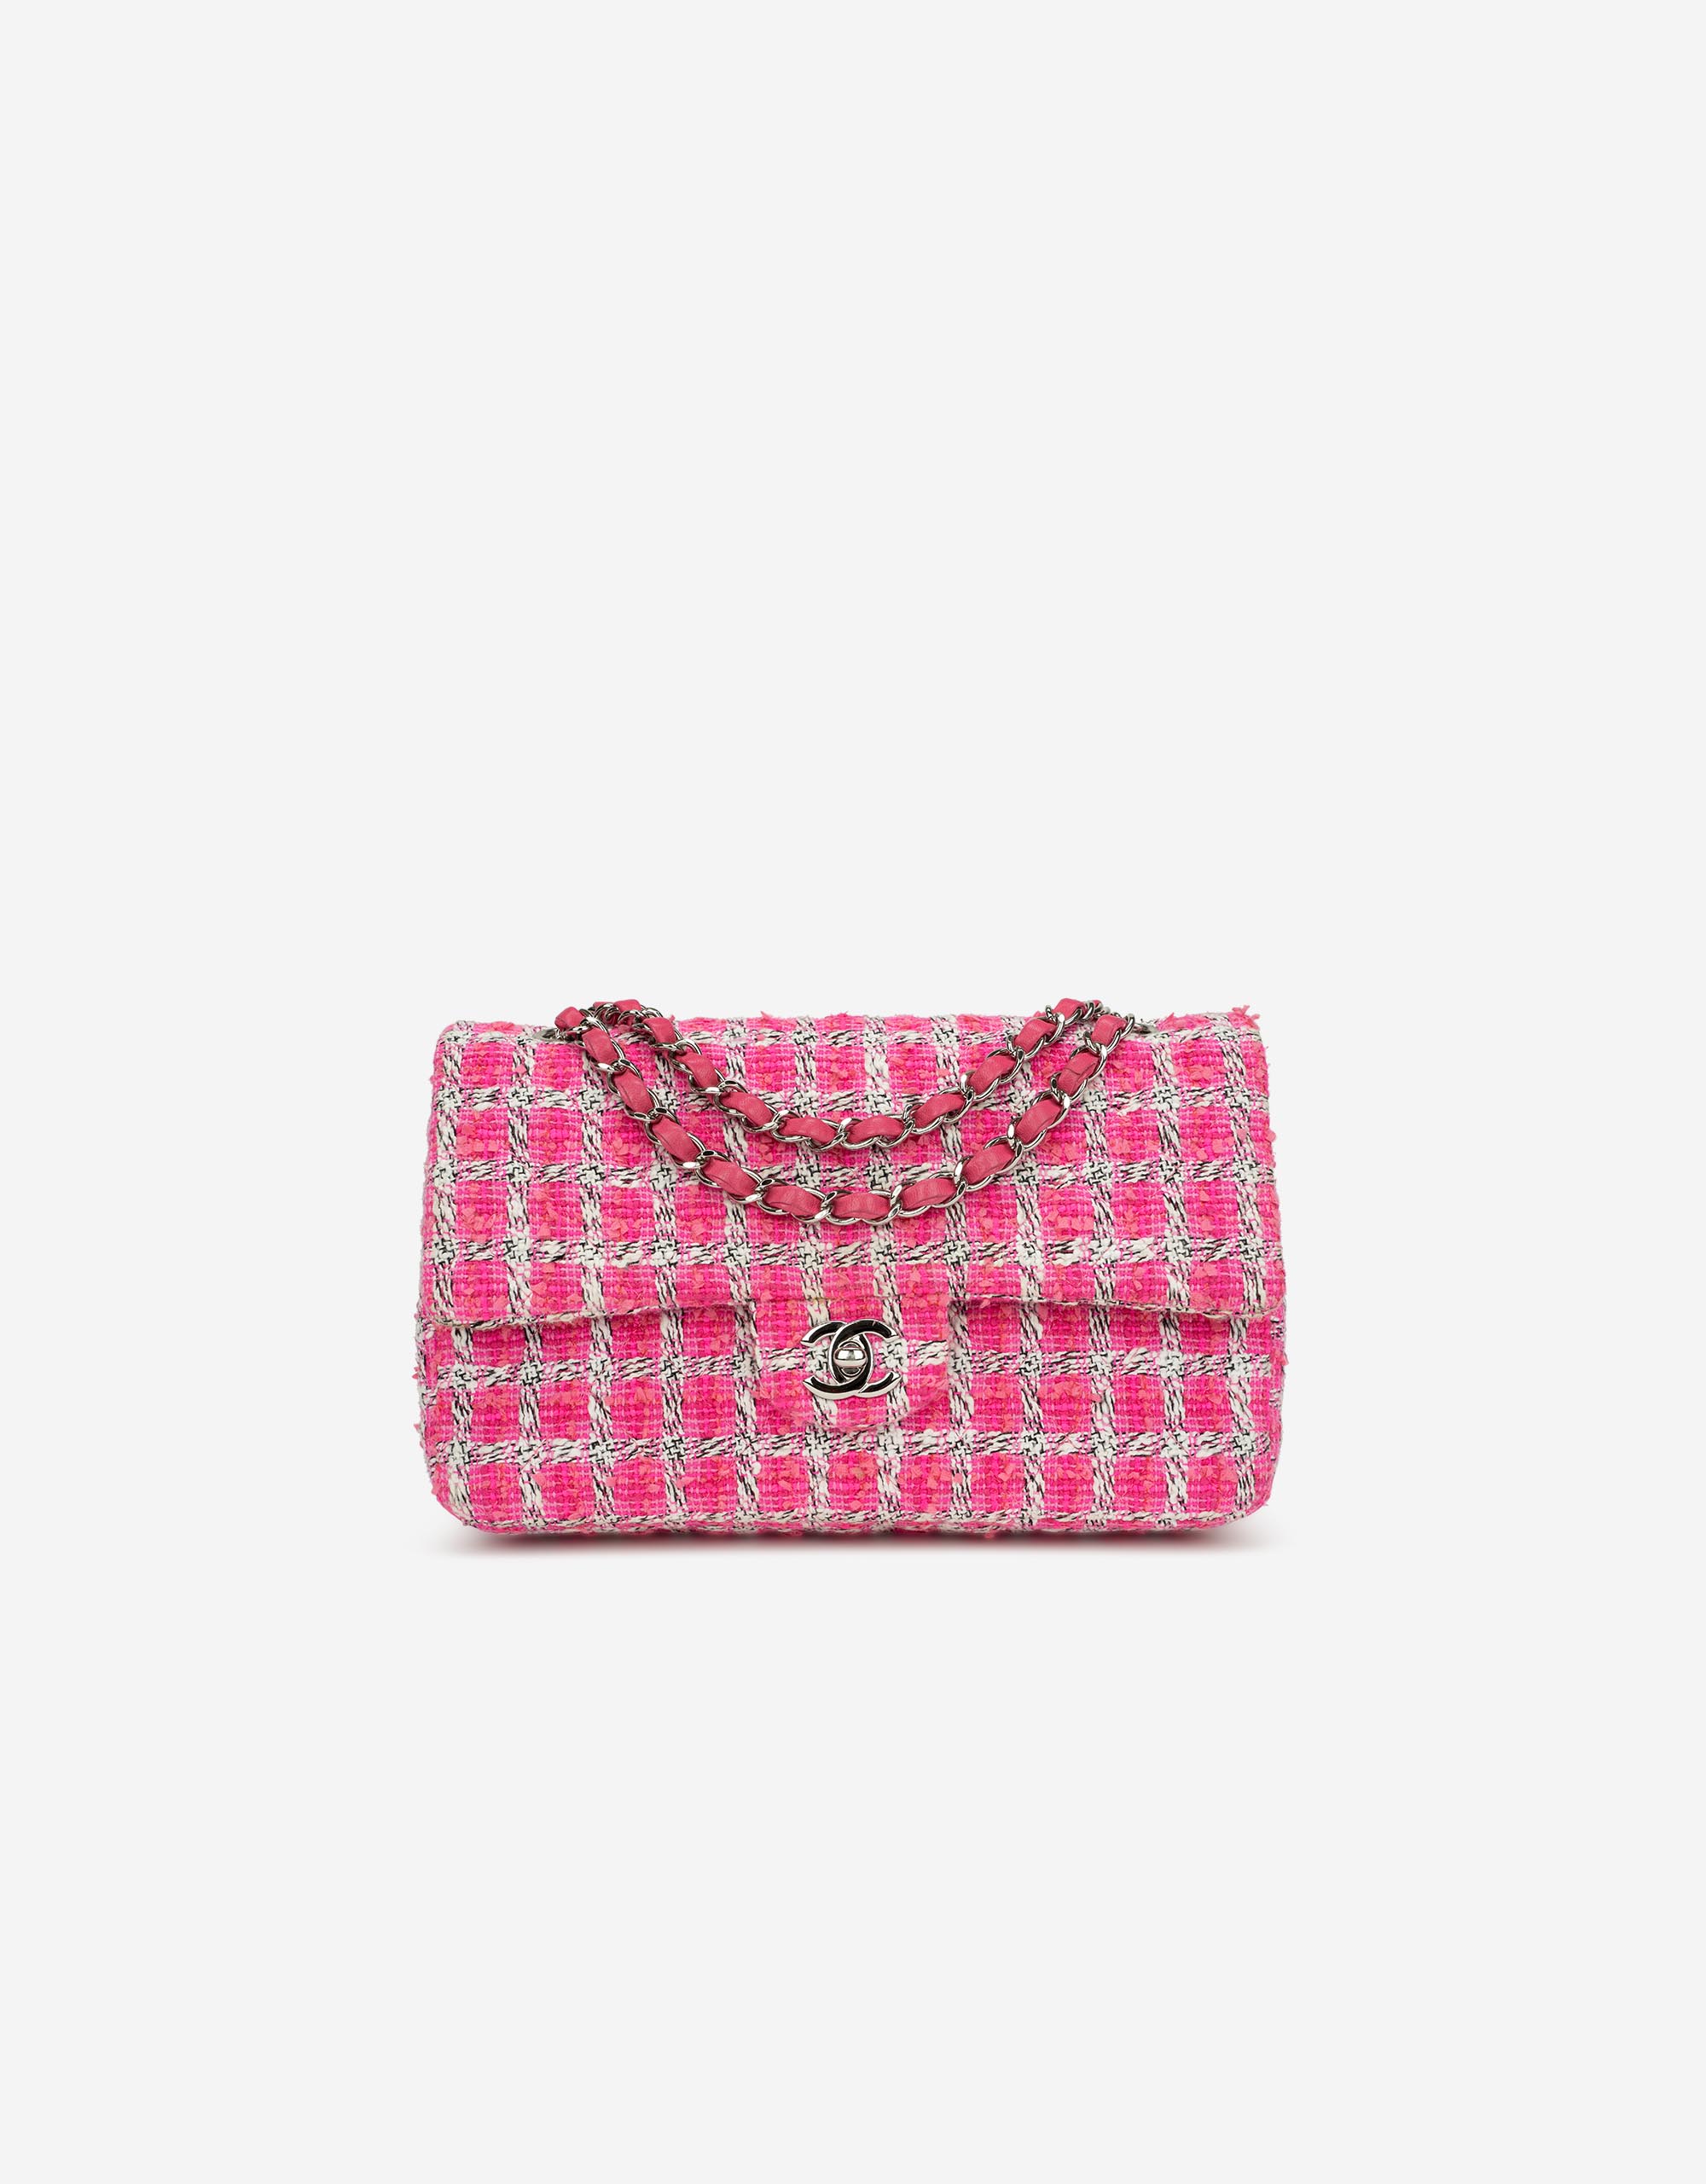 Chanel Timeless Medium Tweed Pink / White | SACLÀB